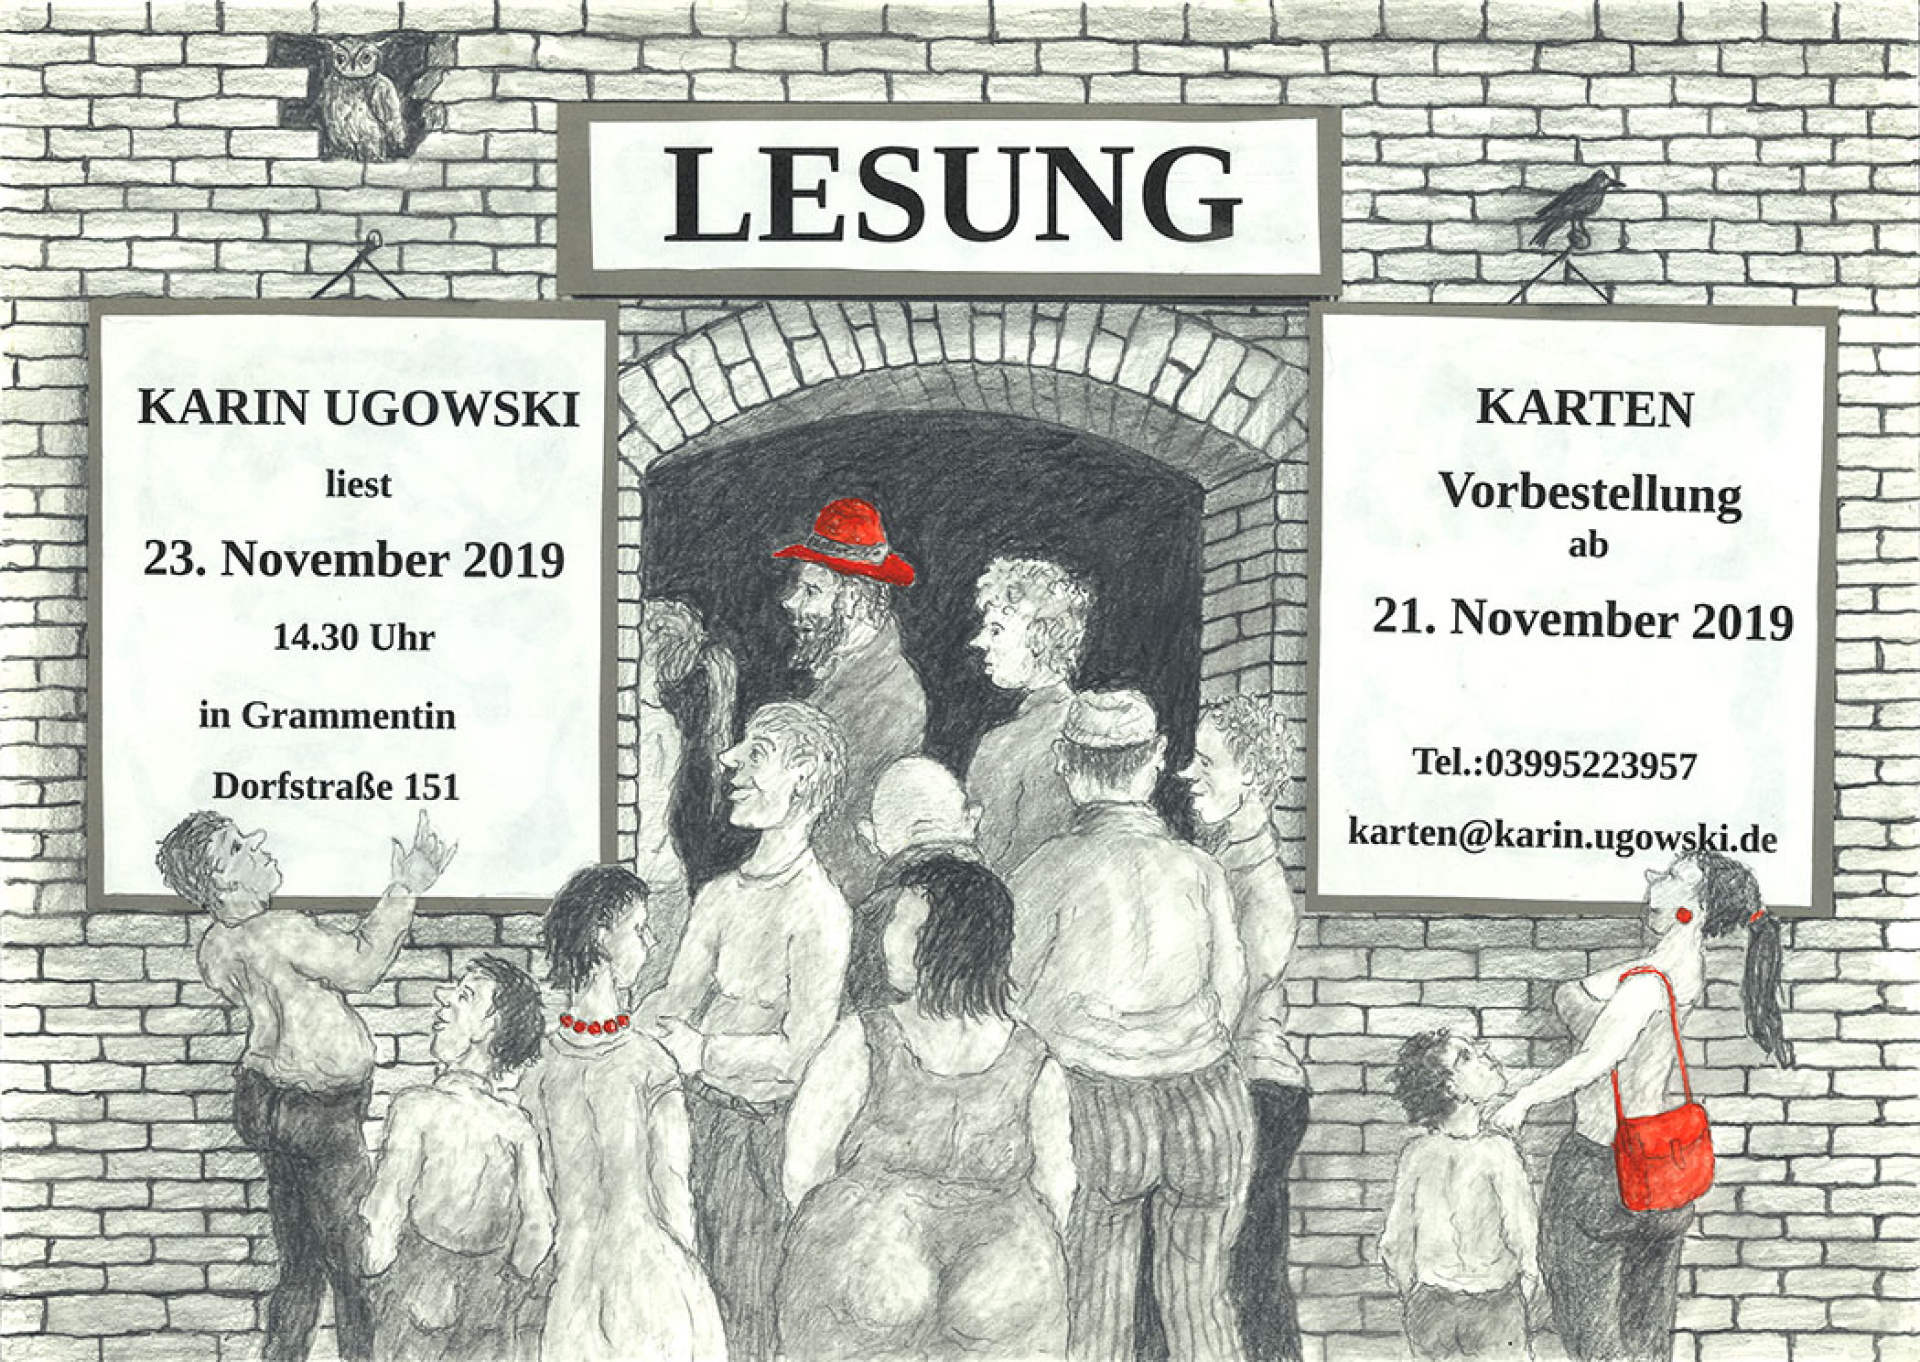 Abbildung: Poster - Lesung Karin Ugowski November 2019